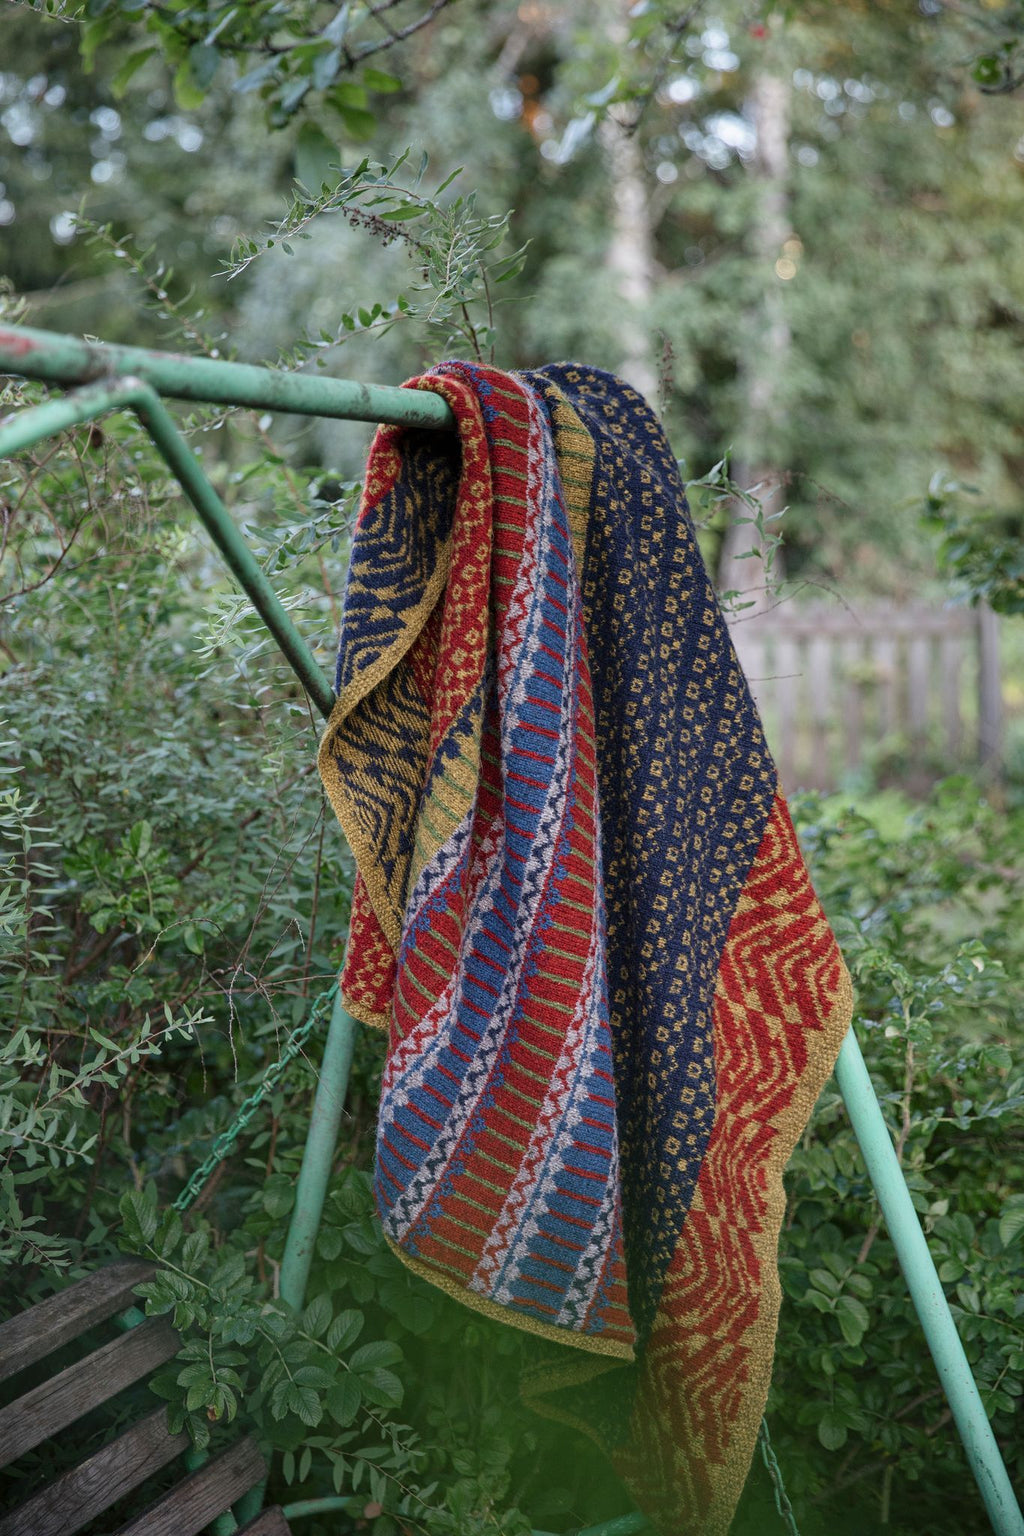 The Knitted Fabric - Dee Hardwicke